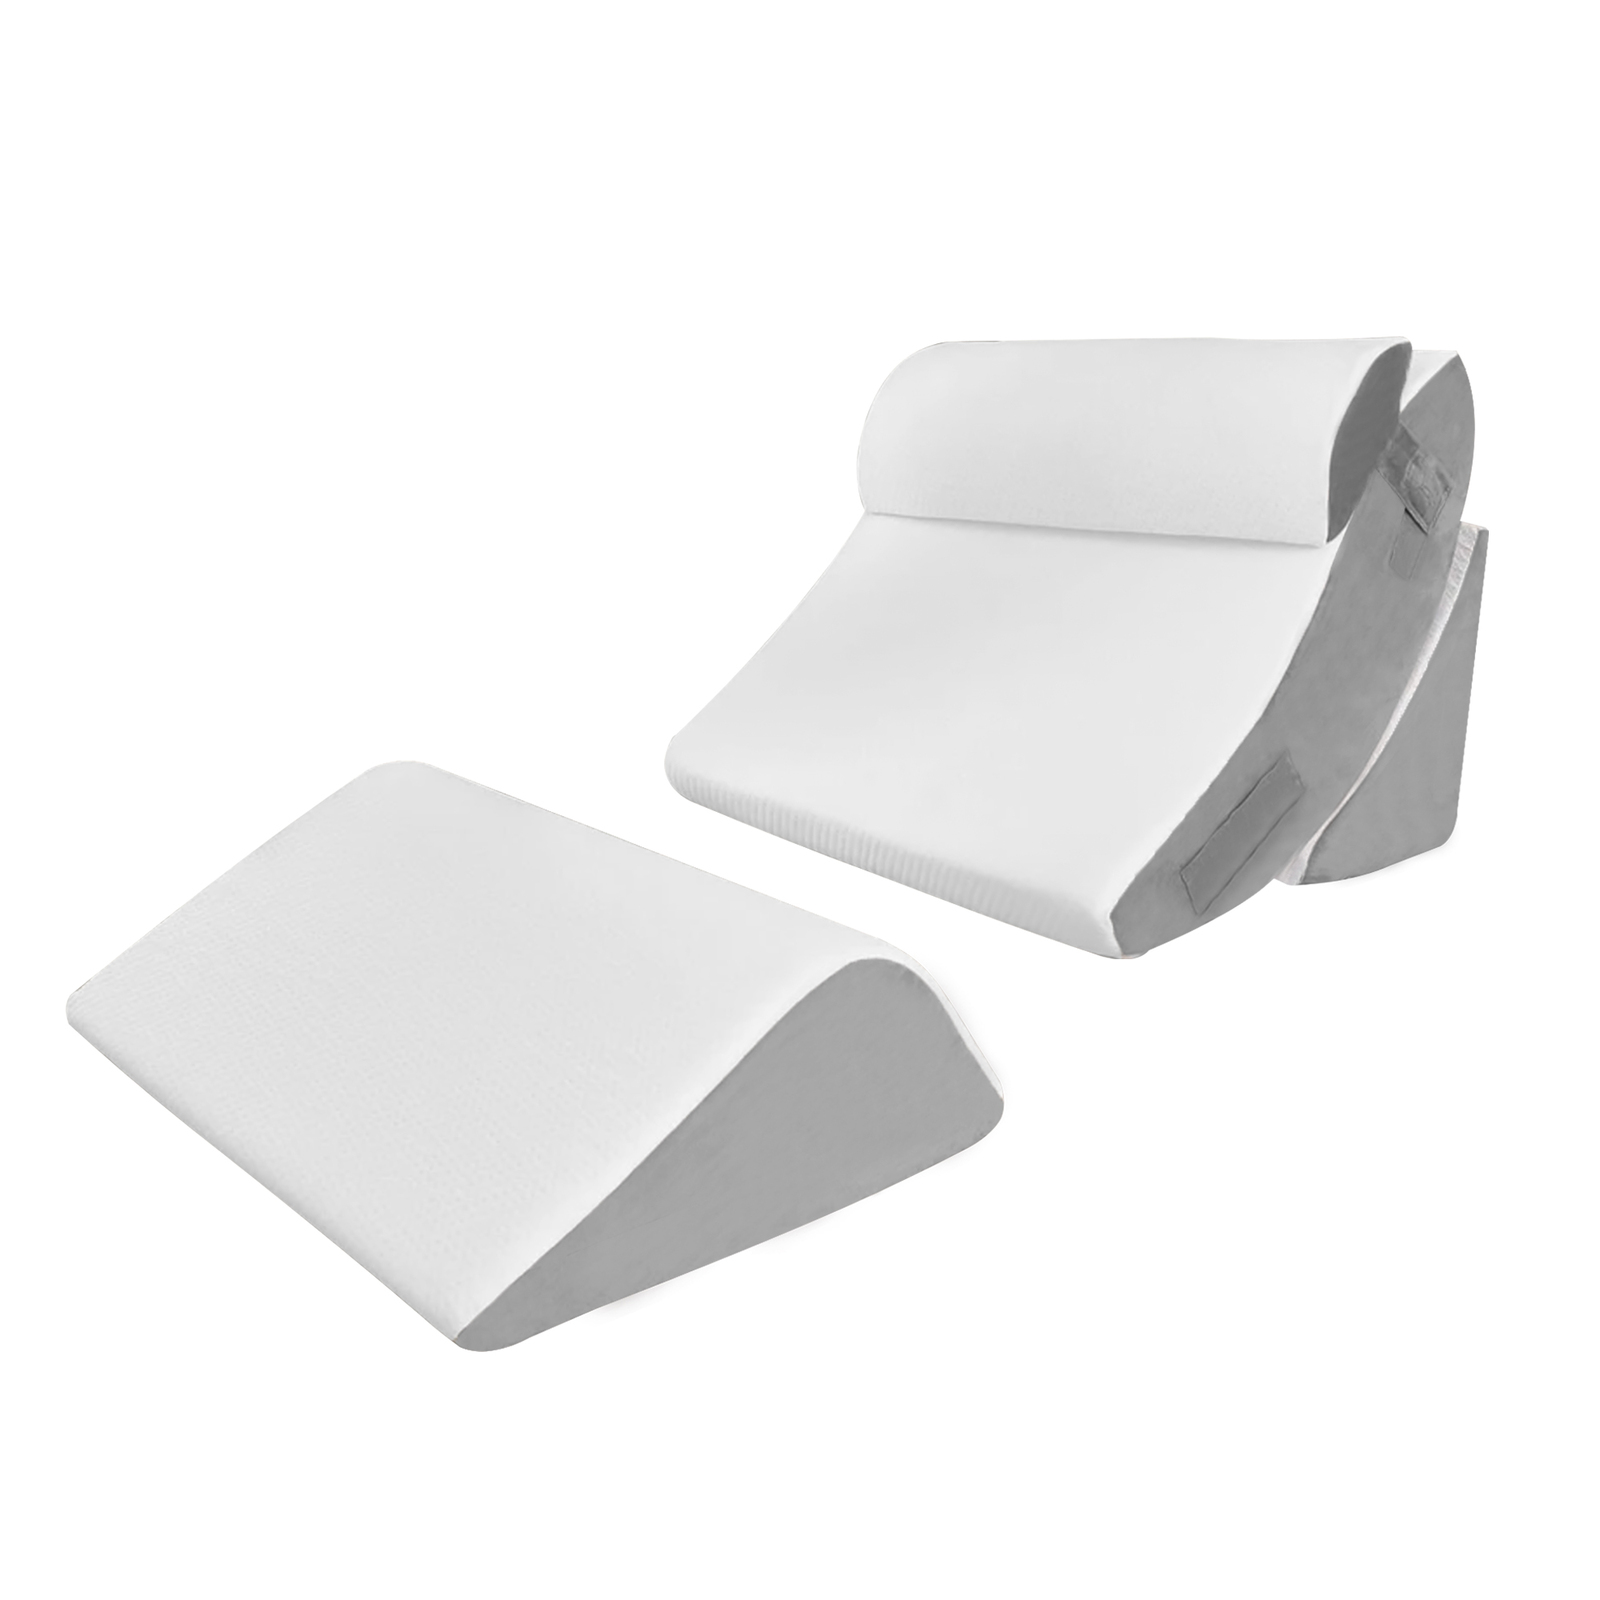 4 pcs Memory Foam Orthopaedic Ergonomic Pillow Adjustable Contour Body Support